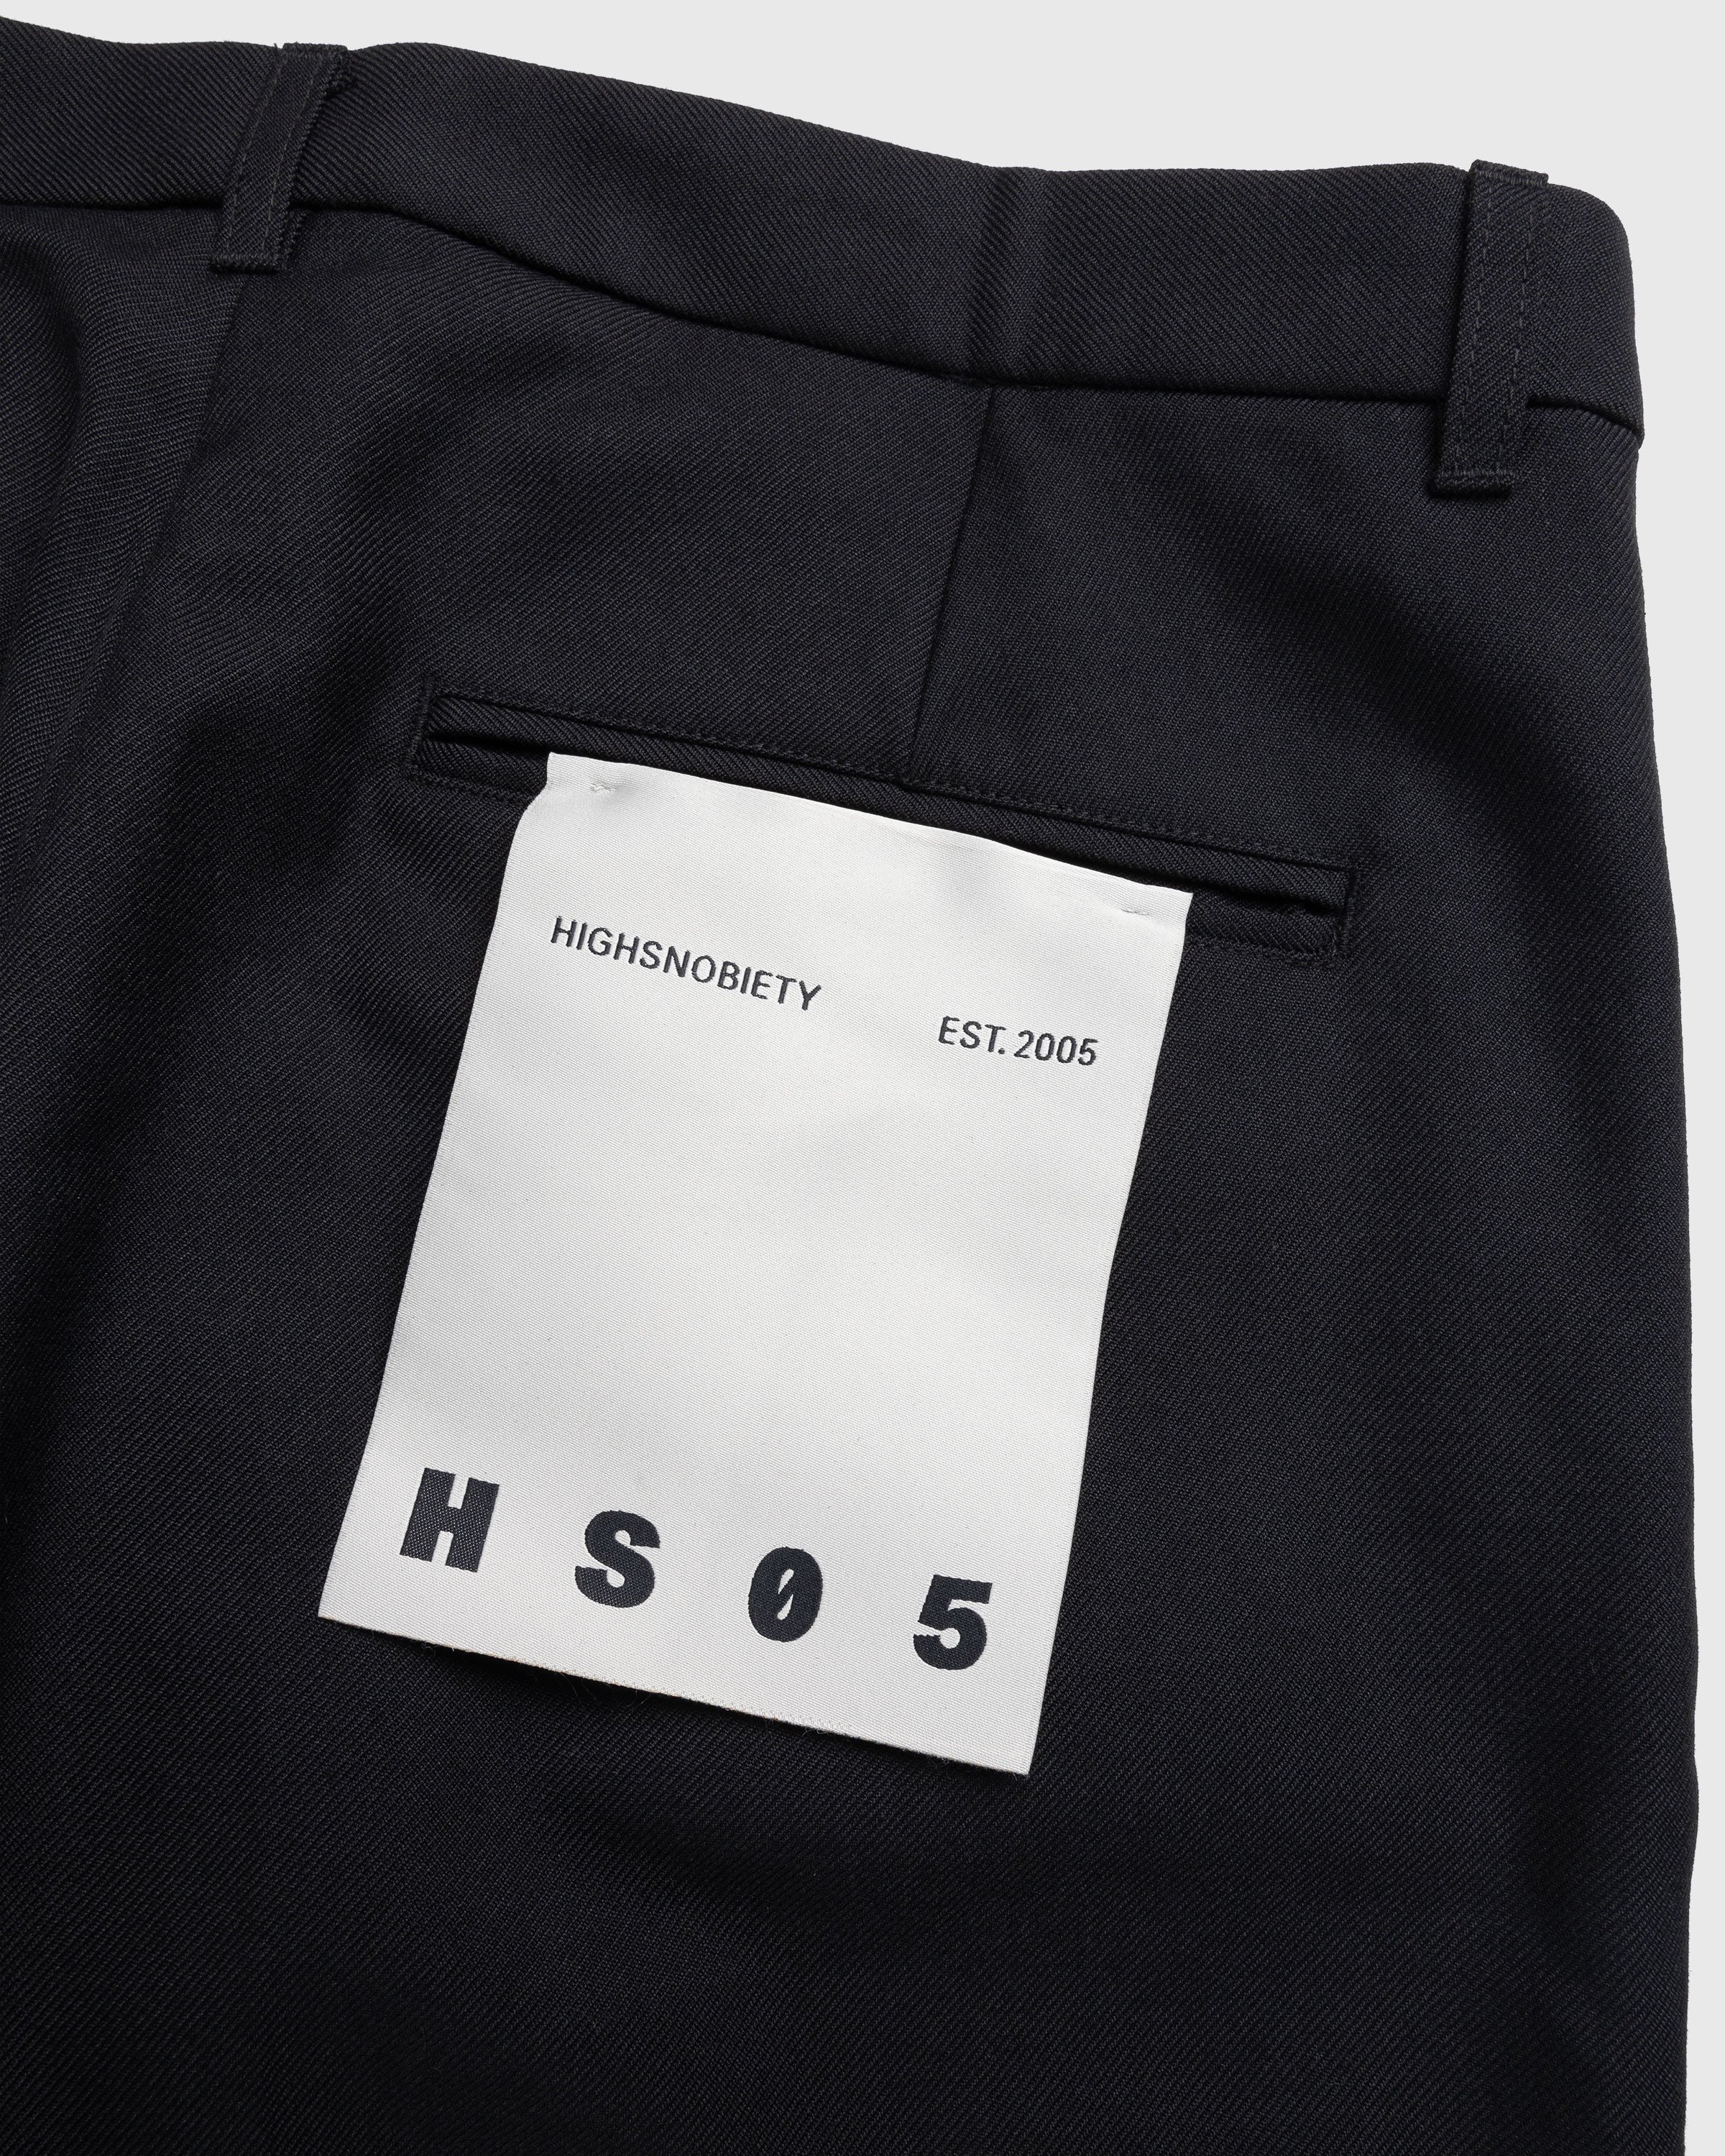 Highsnobiety HS05 - Wool Dress Pants Black - Clothing - Black - Image 7